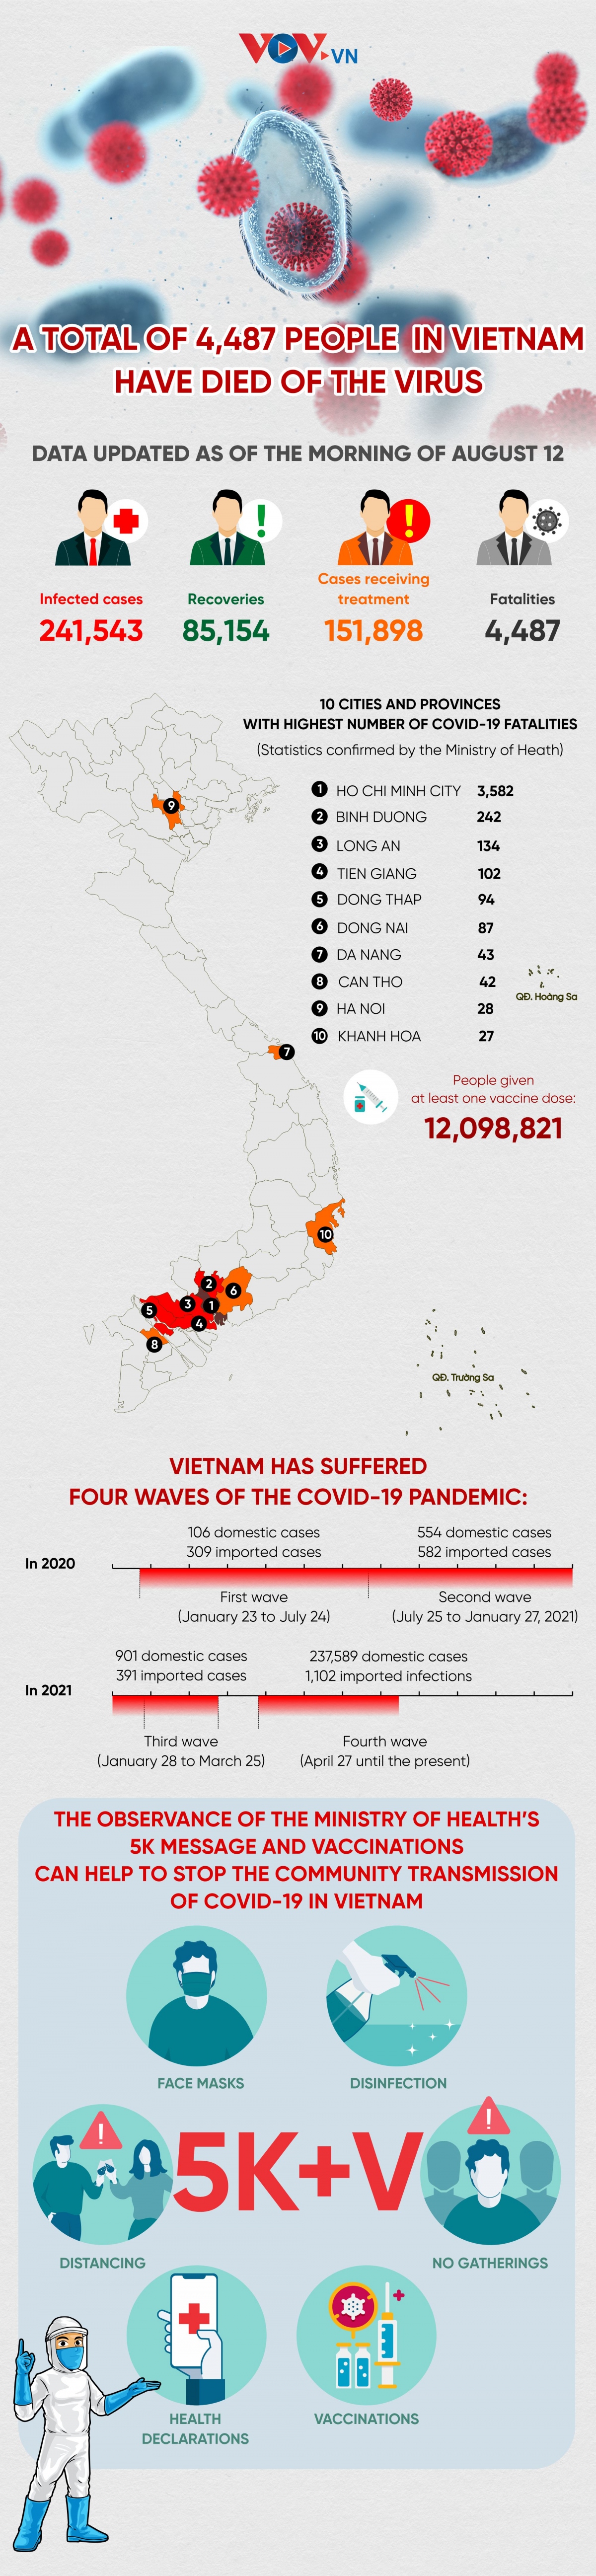 vietnam confirms 4,487 covid-19 deaths, 85,154 recoveries picture 1